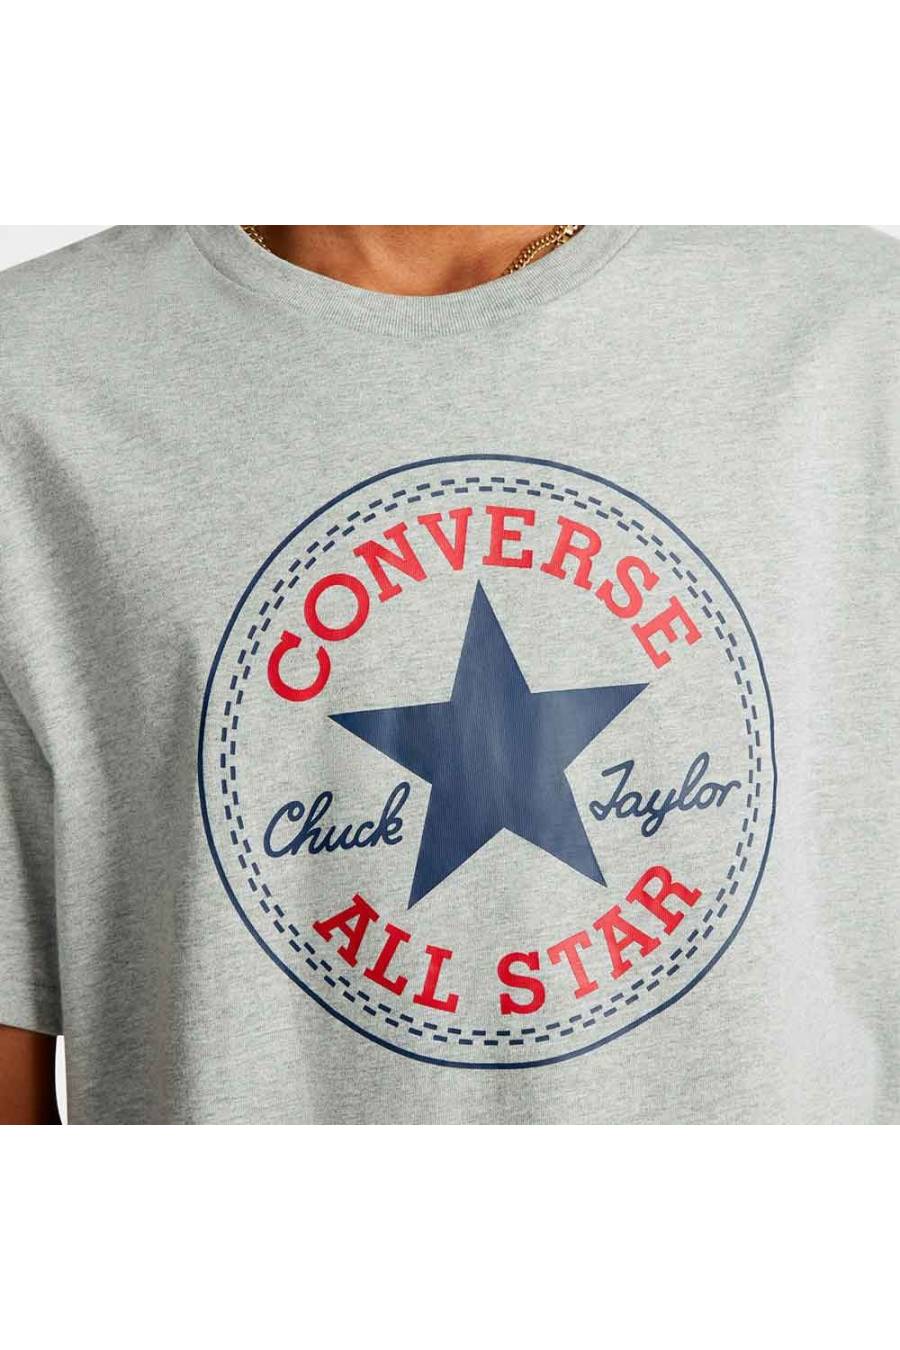 Camiseta Converse Standar Fit Chuck Path 10025459-A07